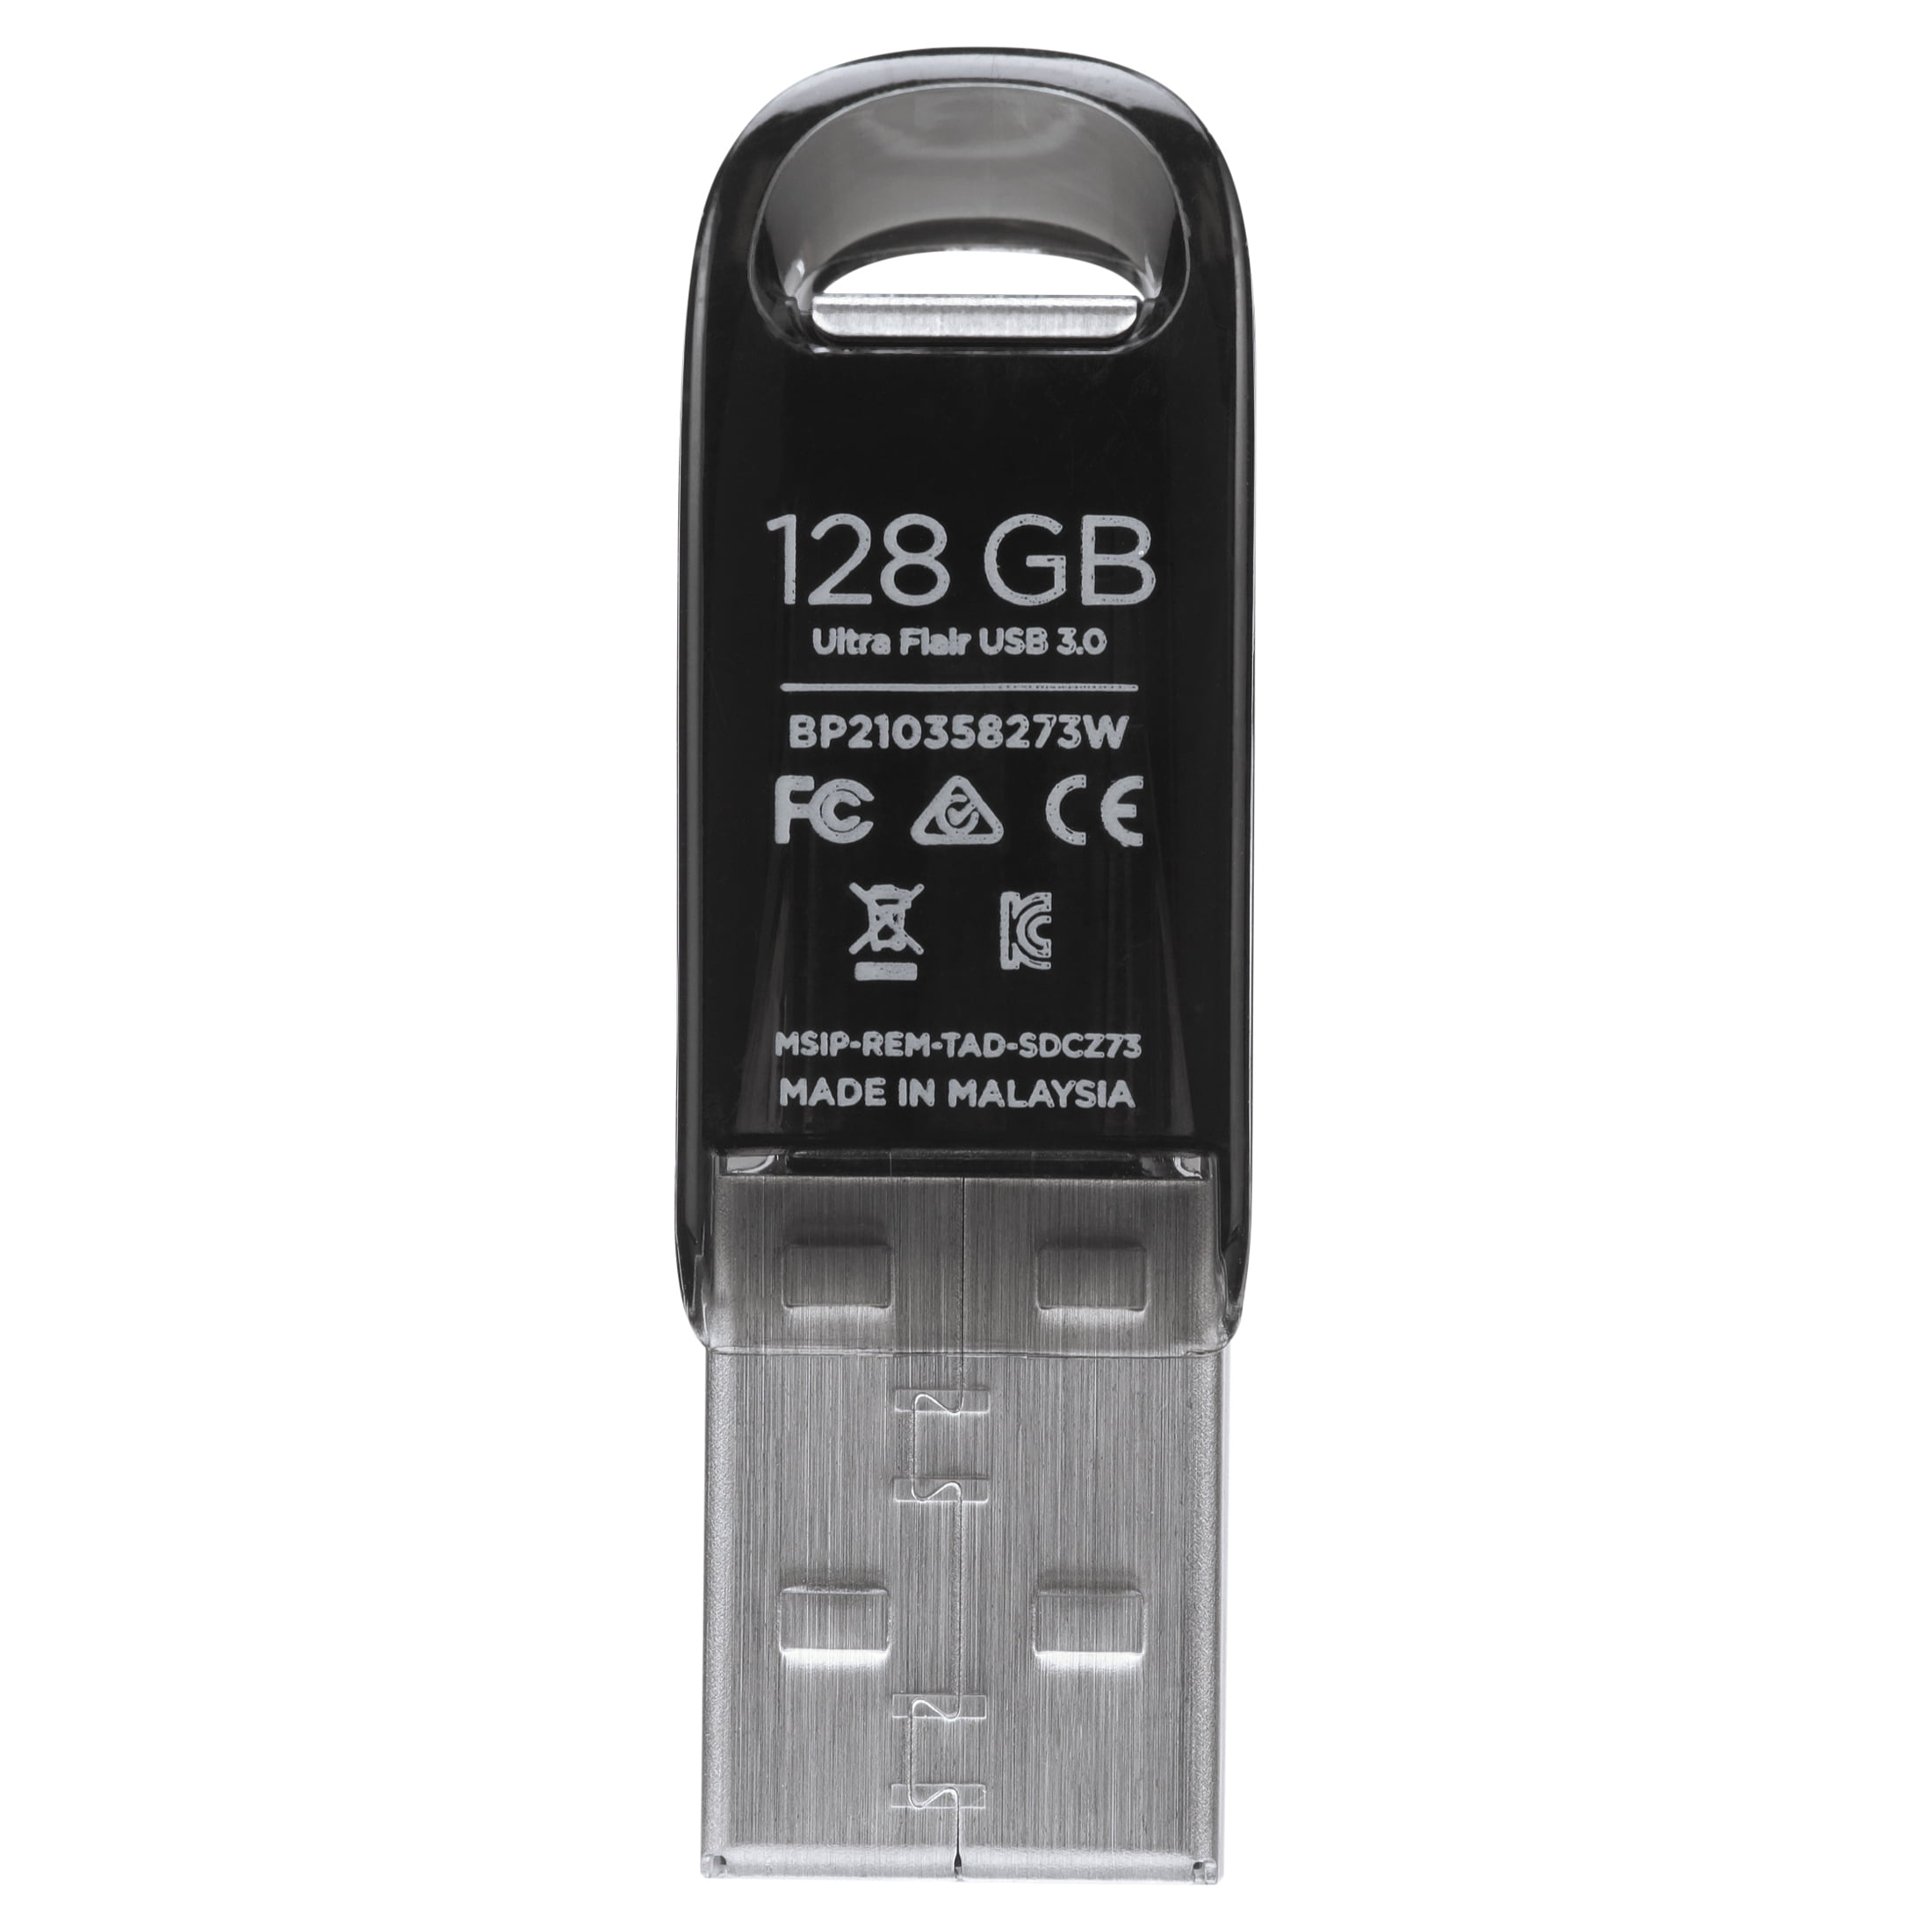 Deform lucky fashion SanDisk 128GB Ultra Flair USB 3.1 Flash Drive - SDCZ73-128G-AW46 -  Walmart.com